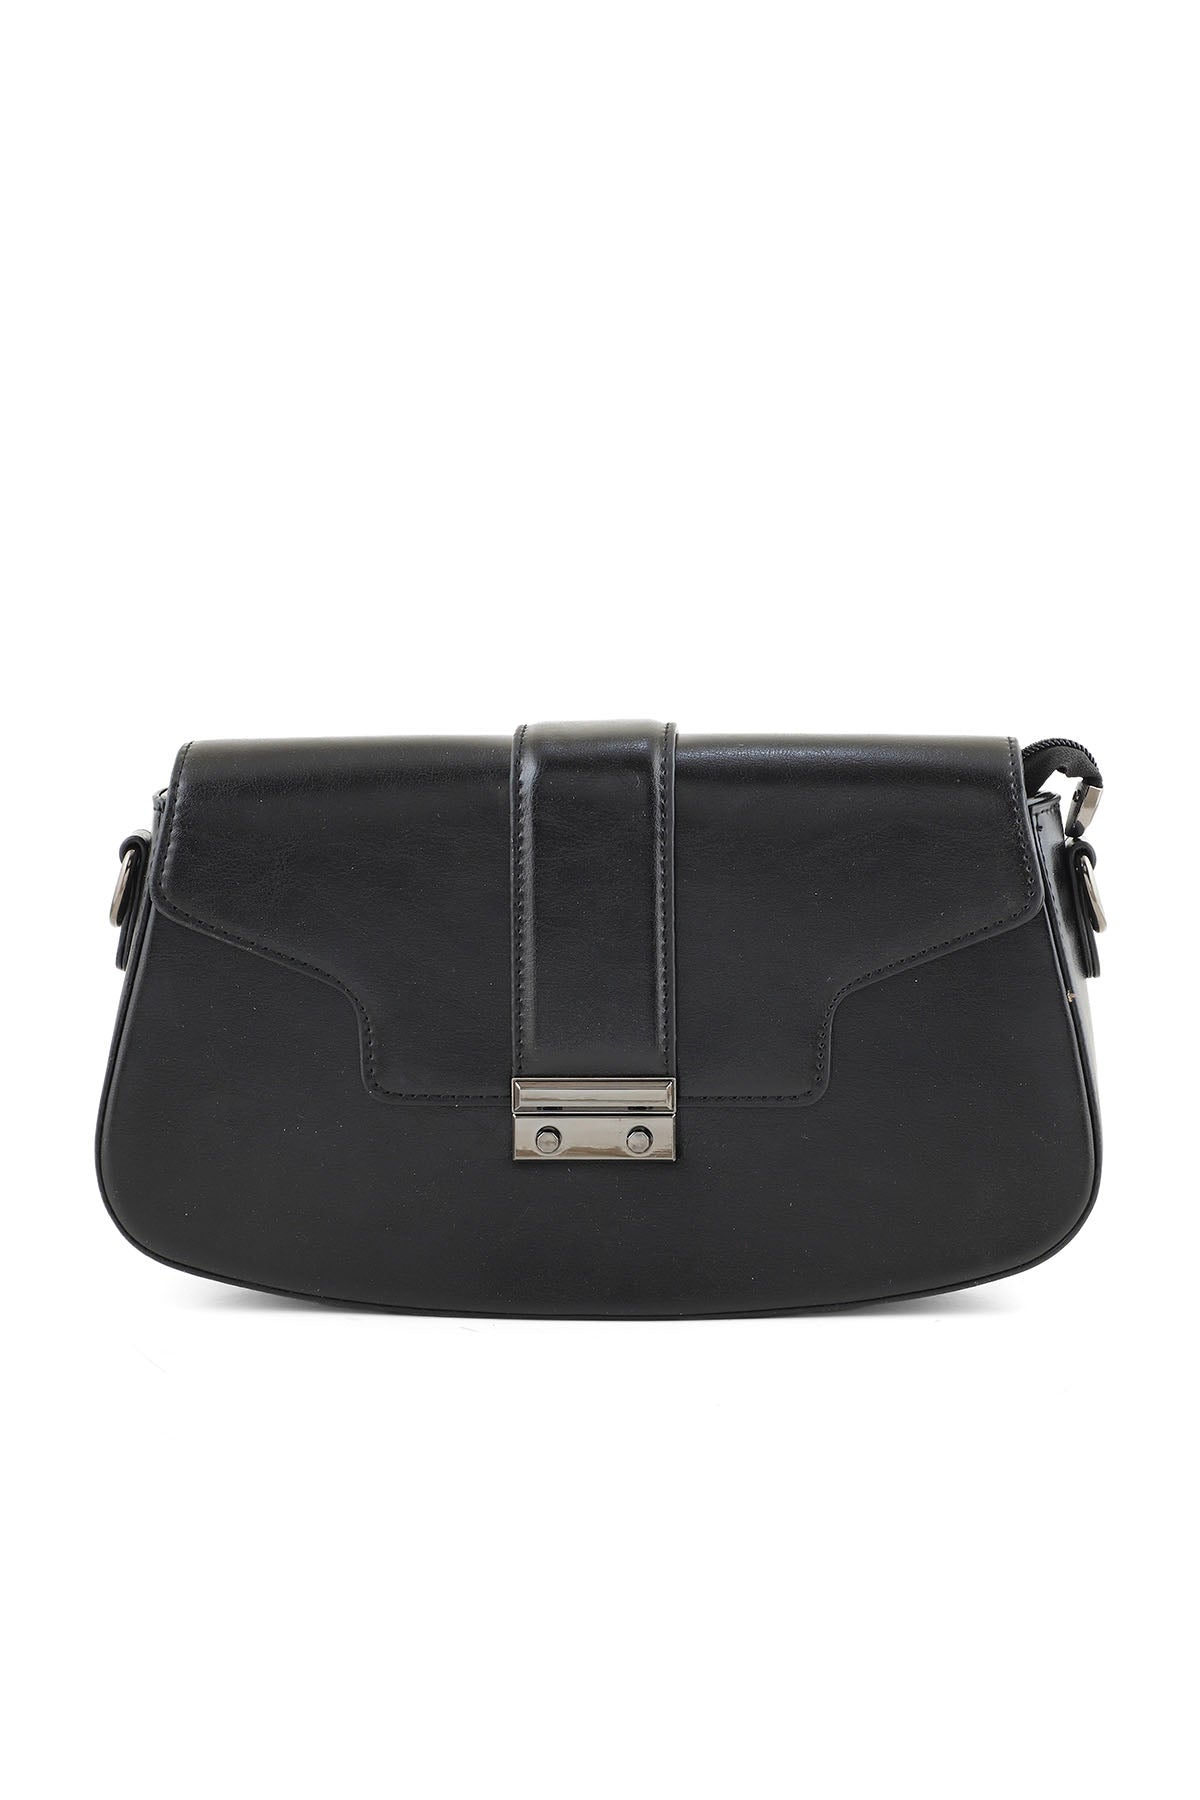 Baguette Shoulder Bags B14978-Black